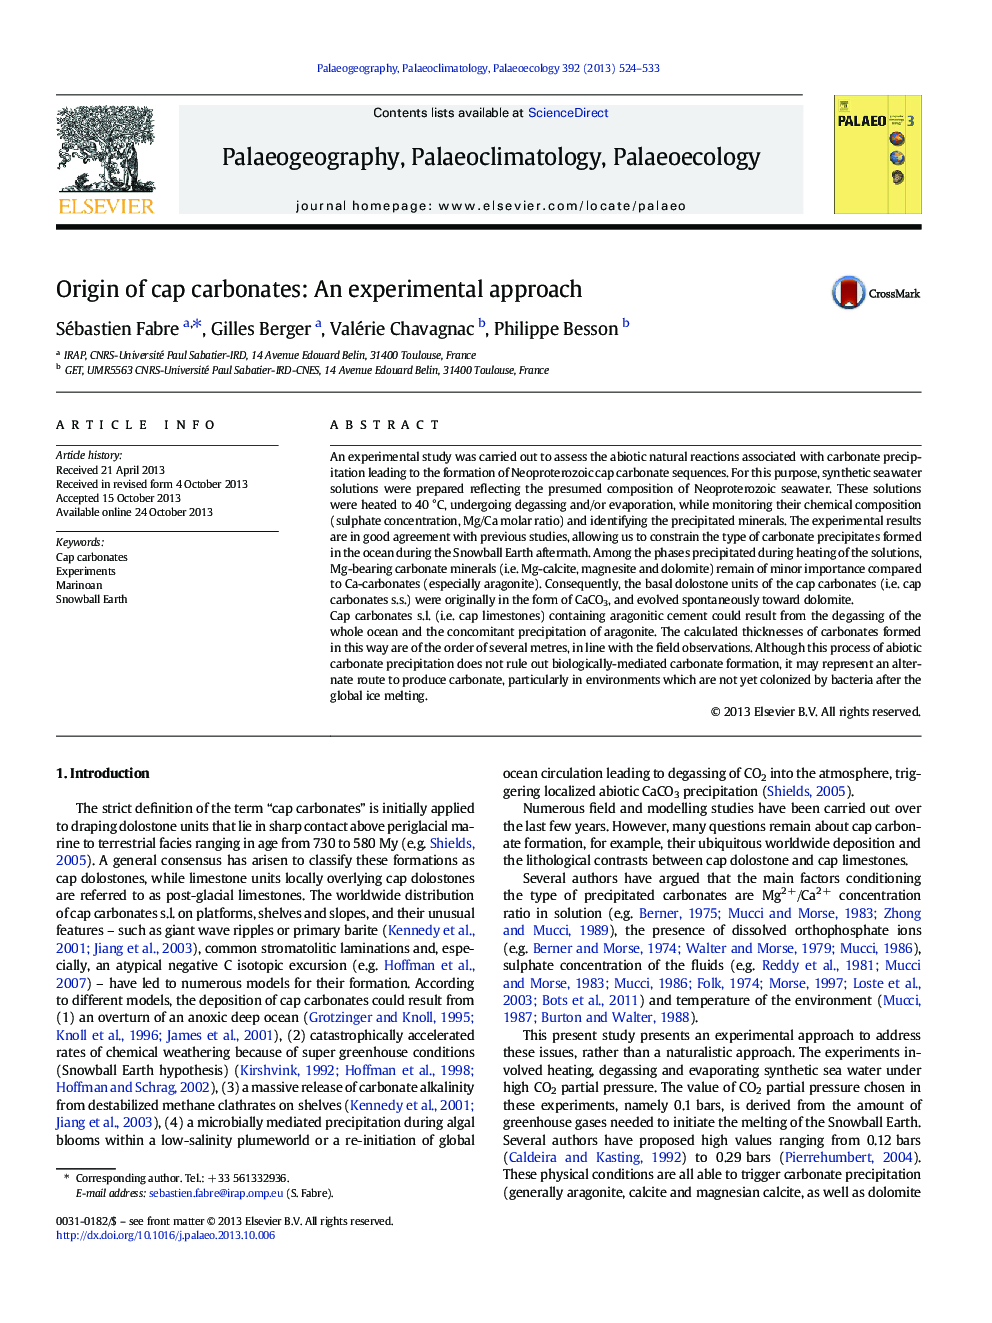 Origin of cap carbonates: An experimental approach